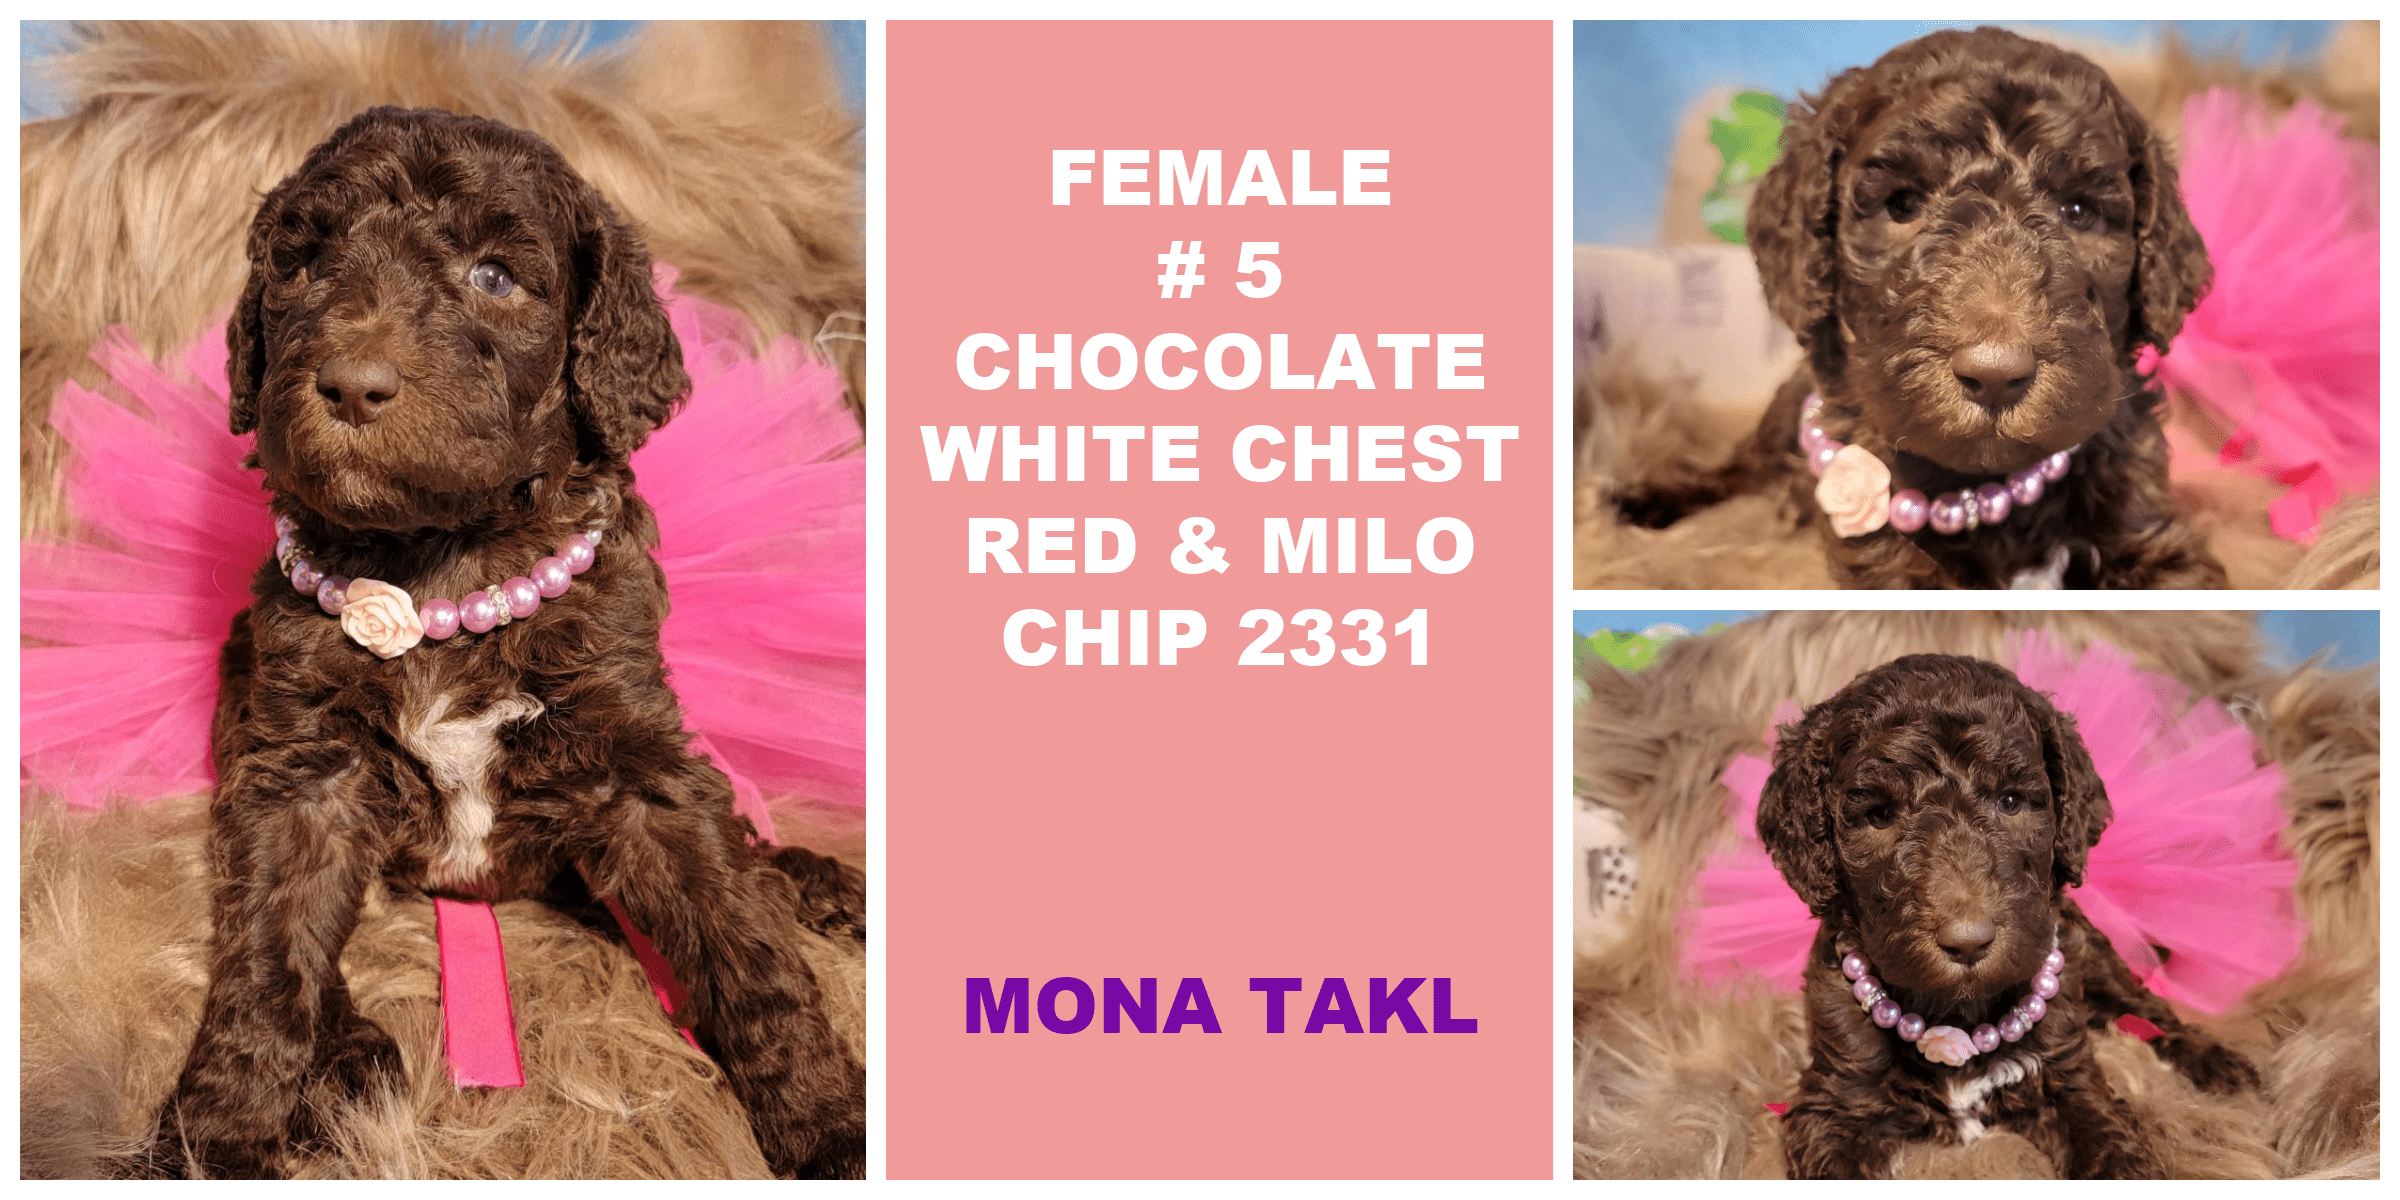 FEMALE 5 CHOCOLATE WHITE CHEST RED MILO CHIP 2331 MONA TAKL